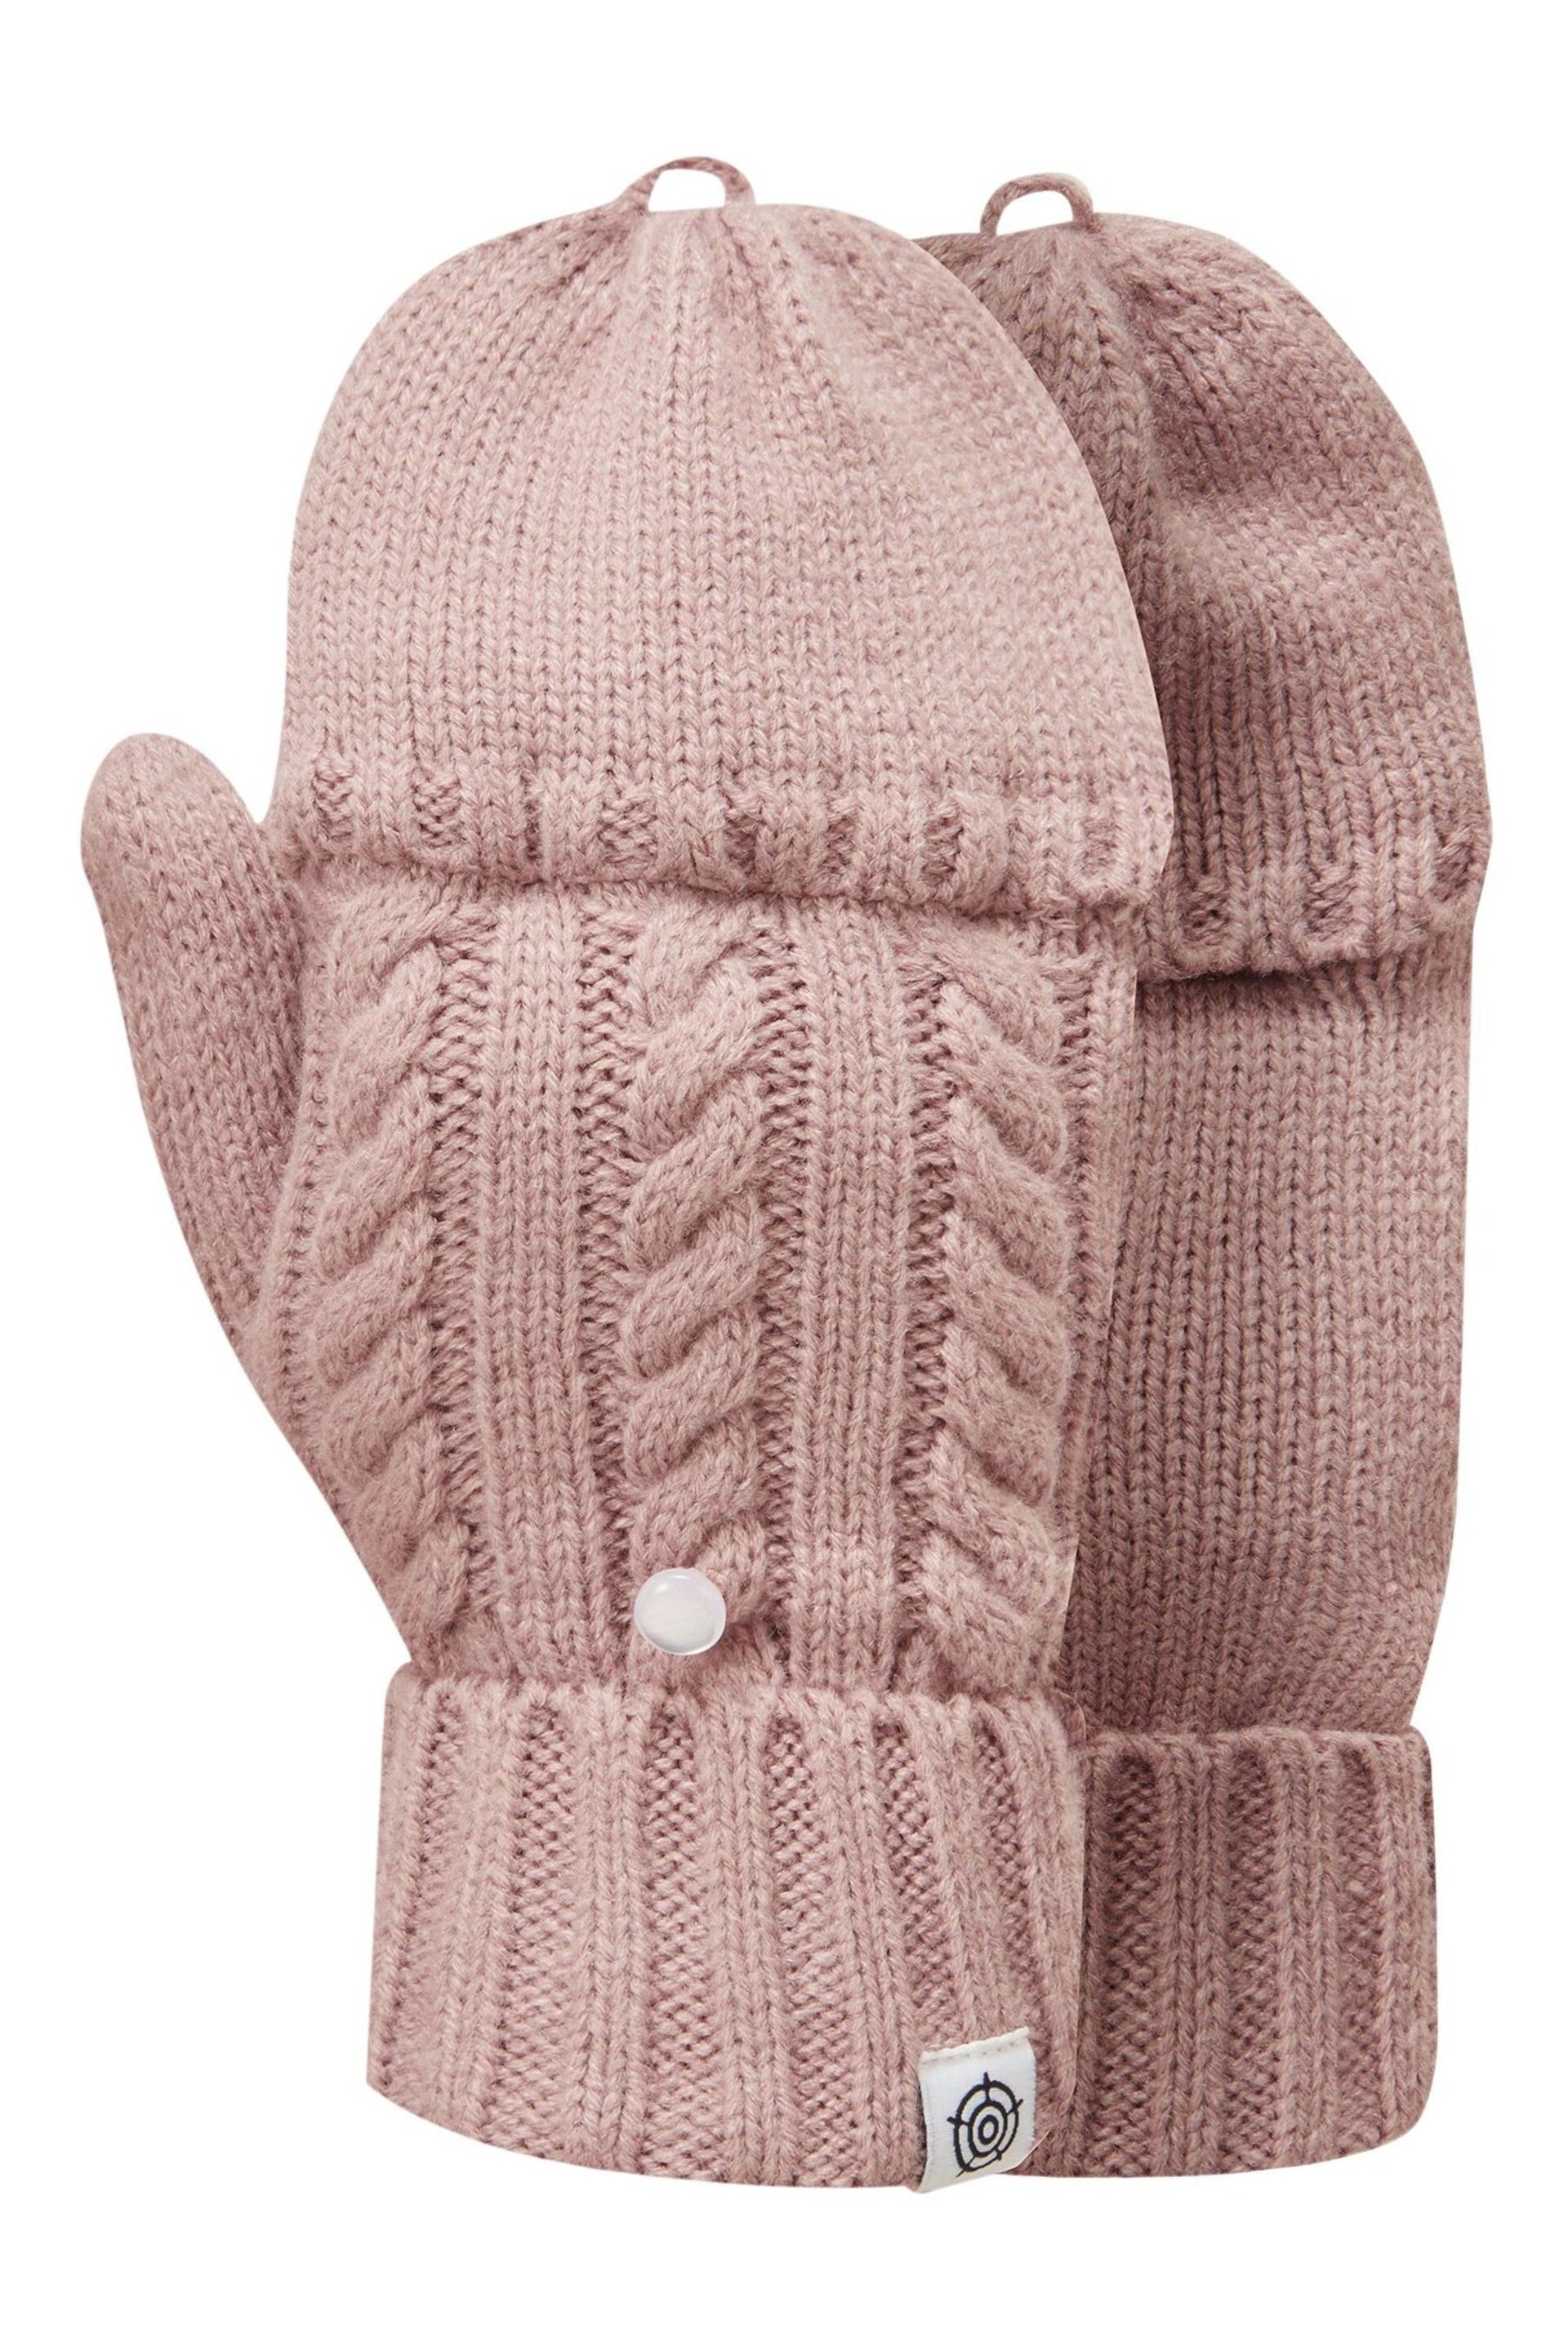 Tog 24 Pink Mid Marl Wilks Knitted Fingerless Gloves - Image 2 of 3